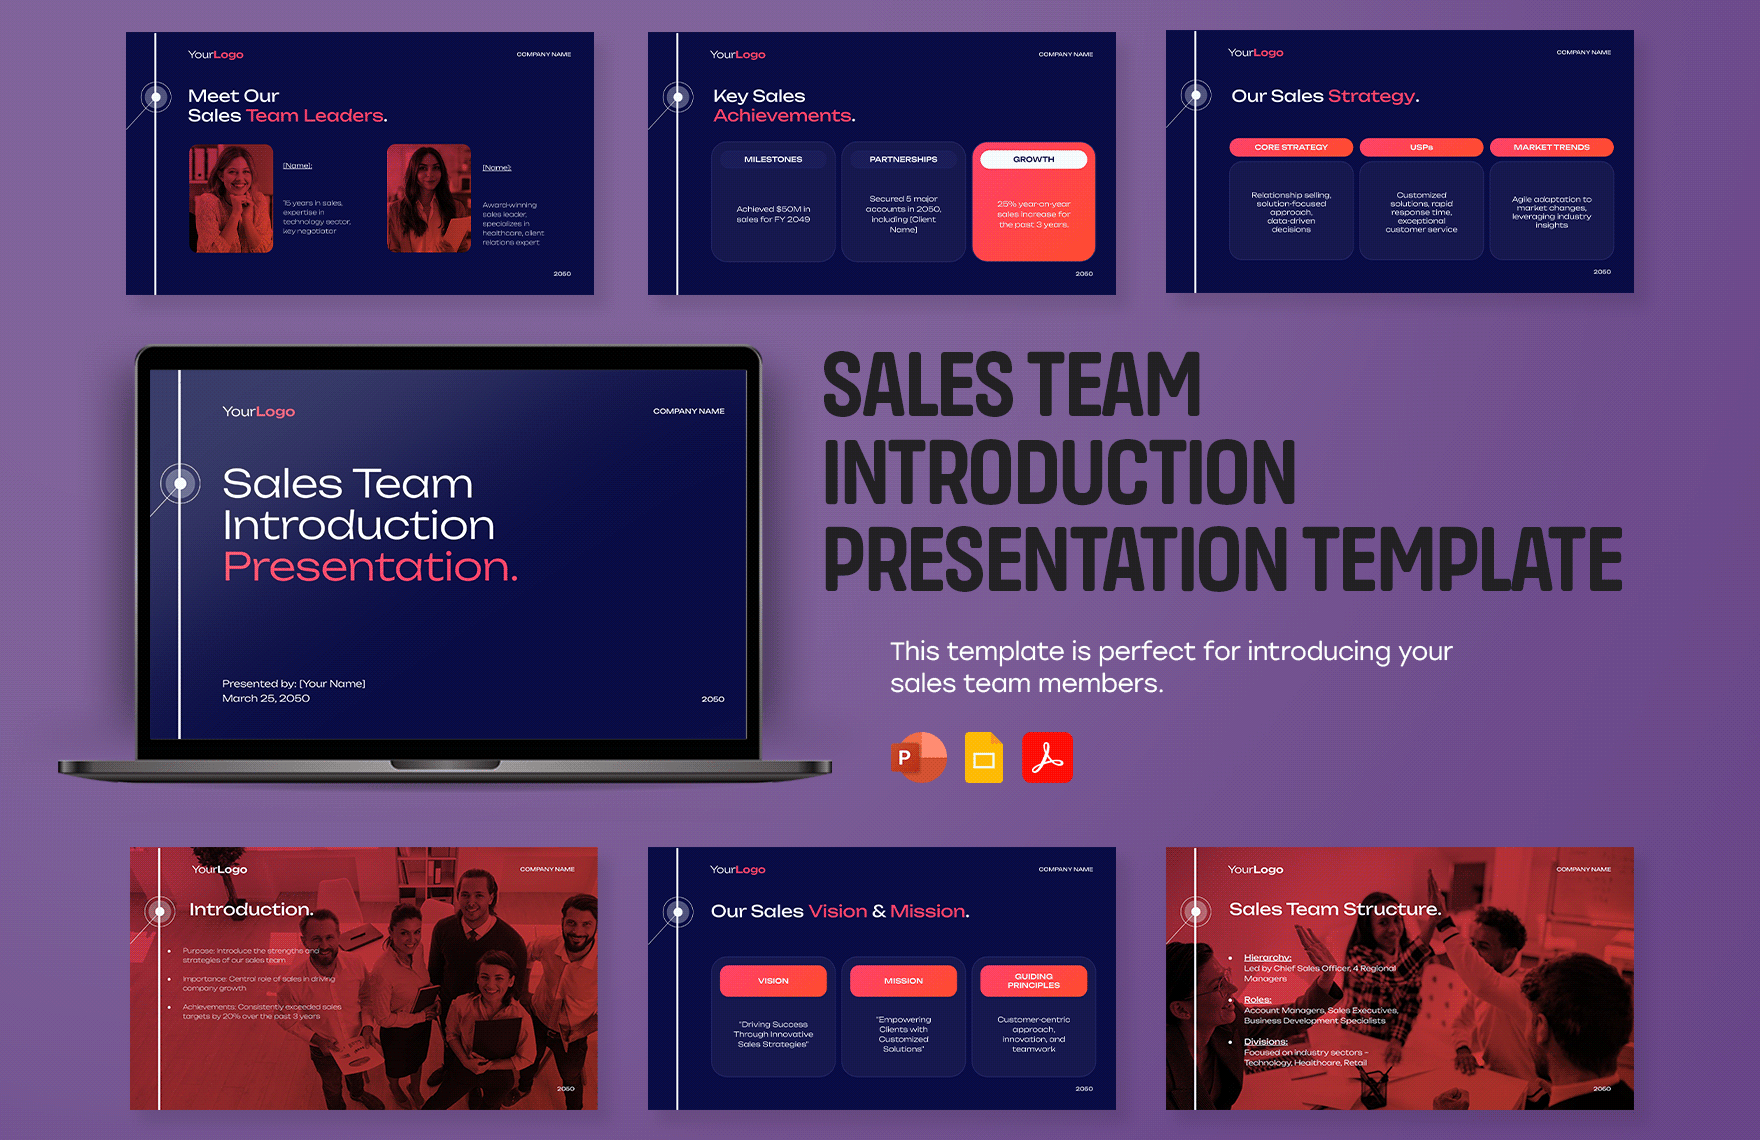 Sales Team Introduction Presentation Template